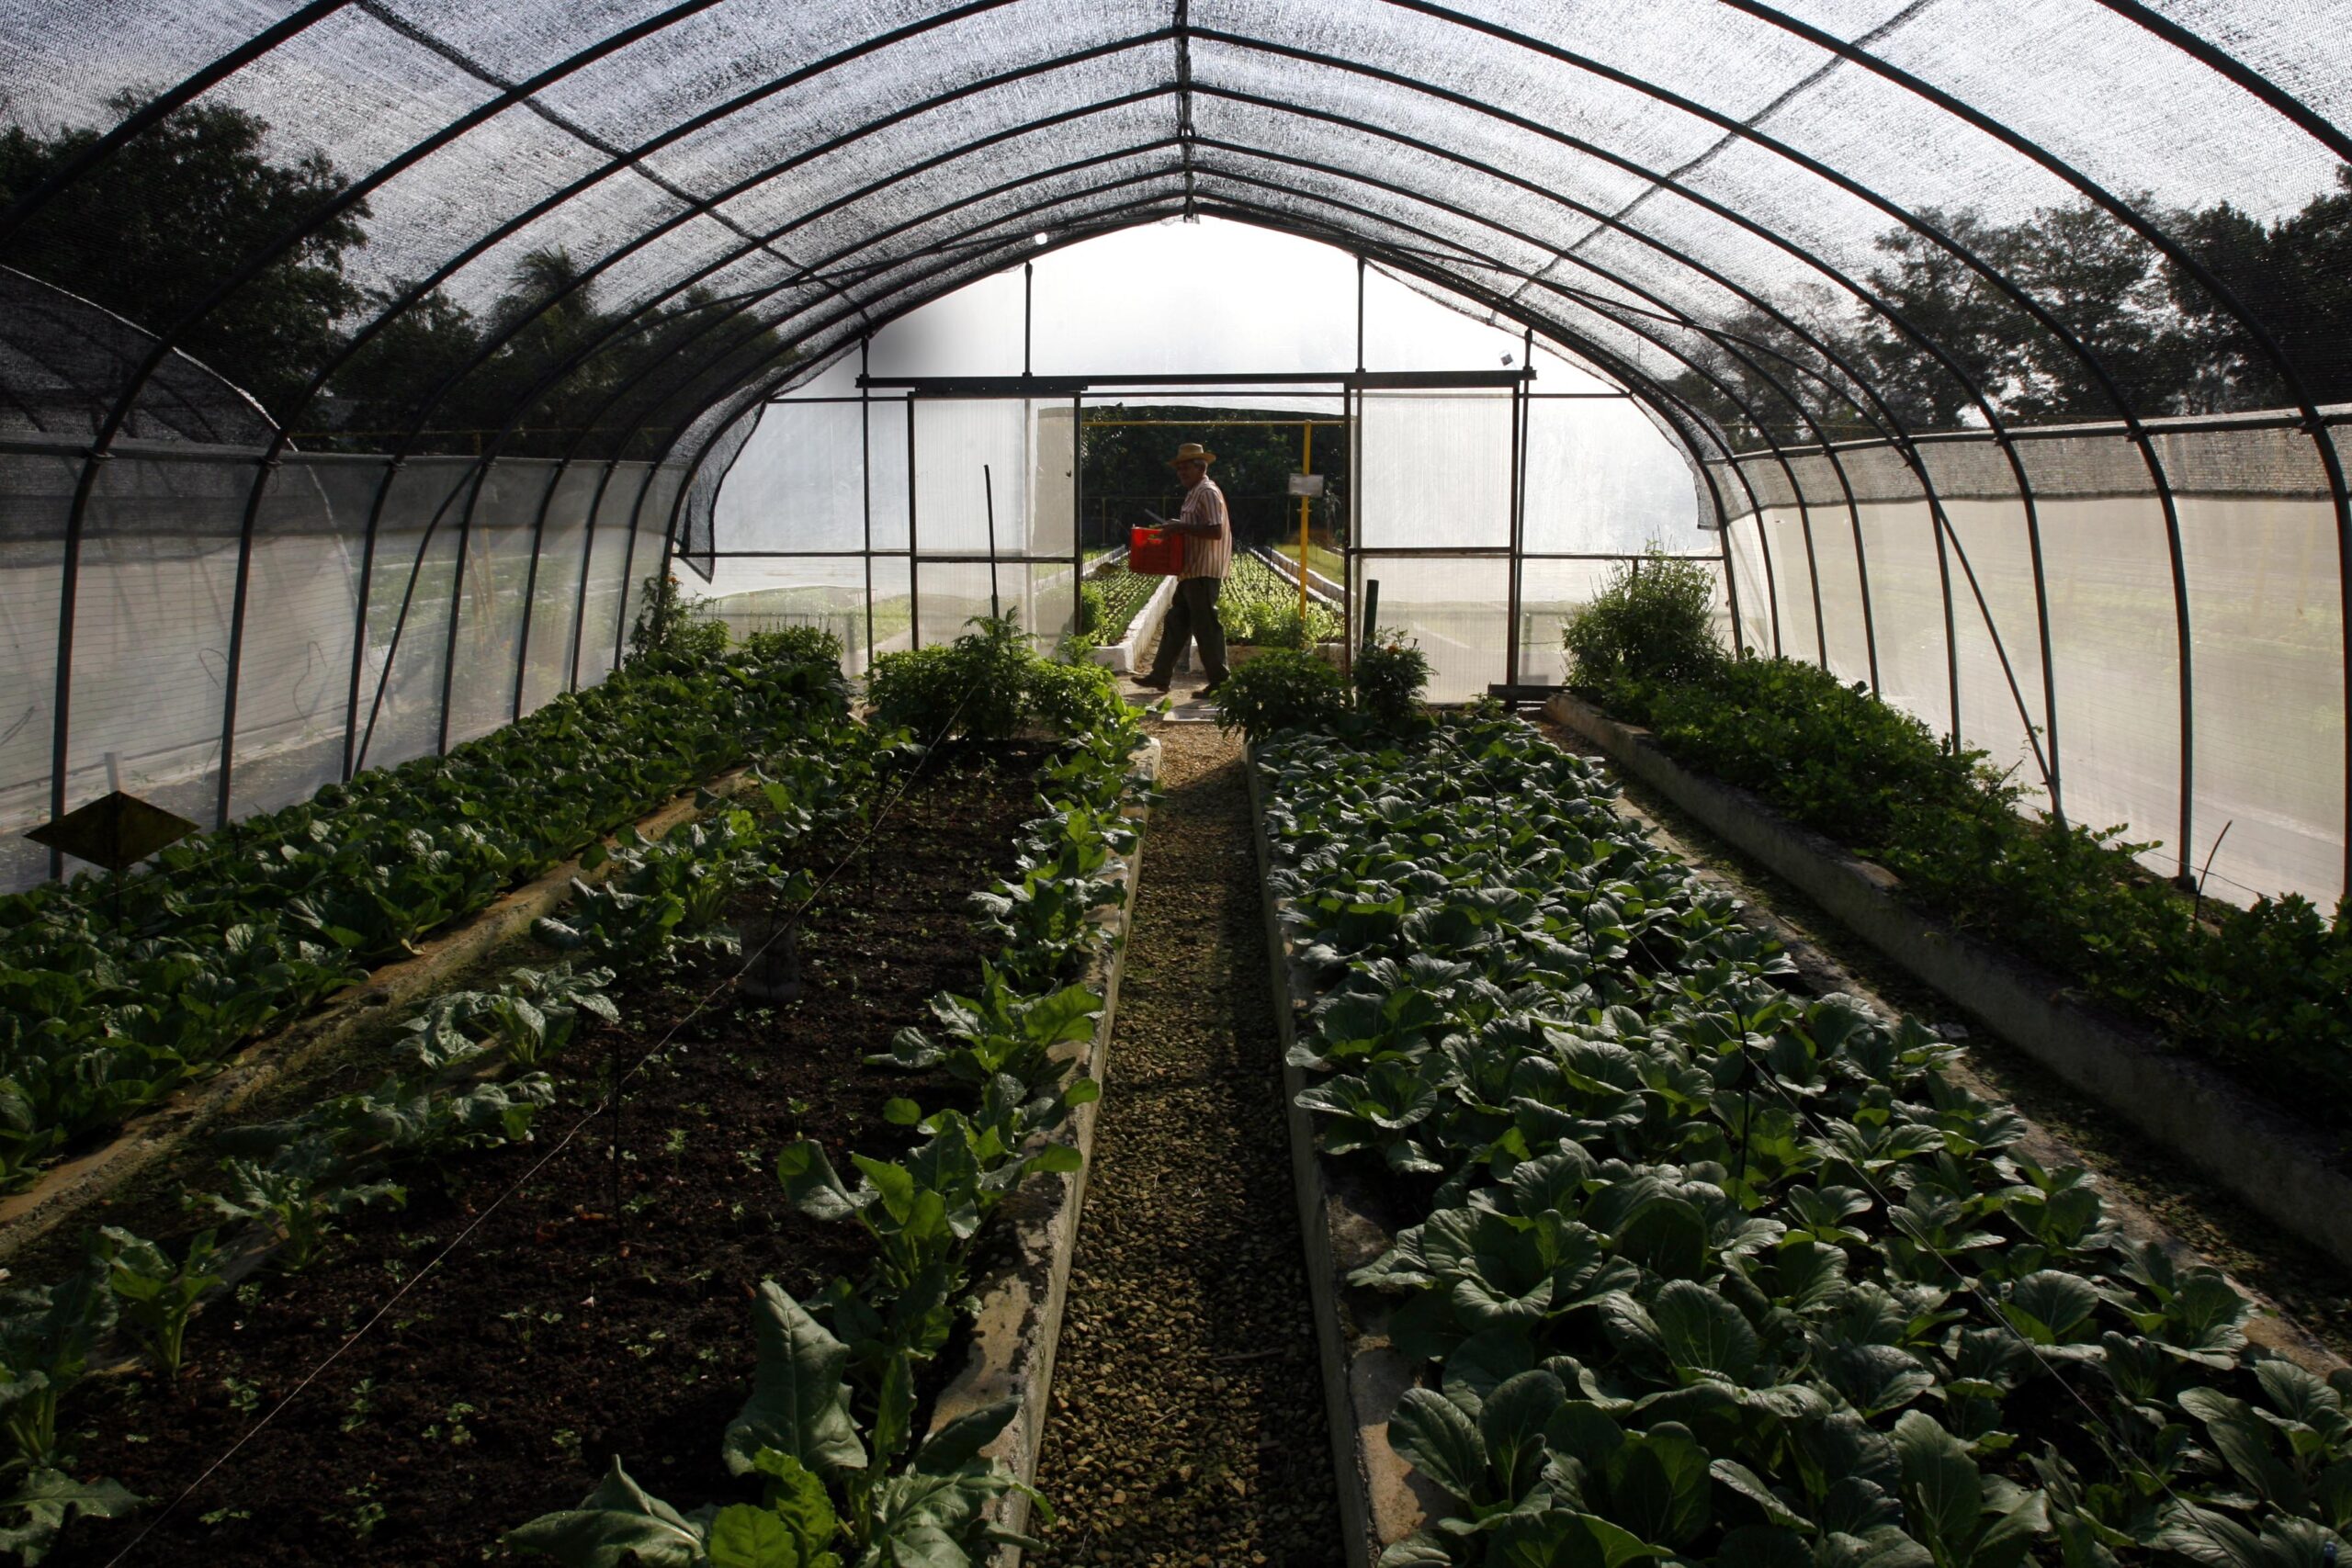 A farmer carries lettuce in a hydroponic farm